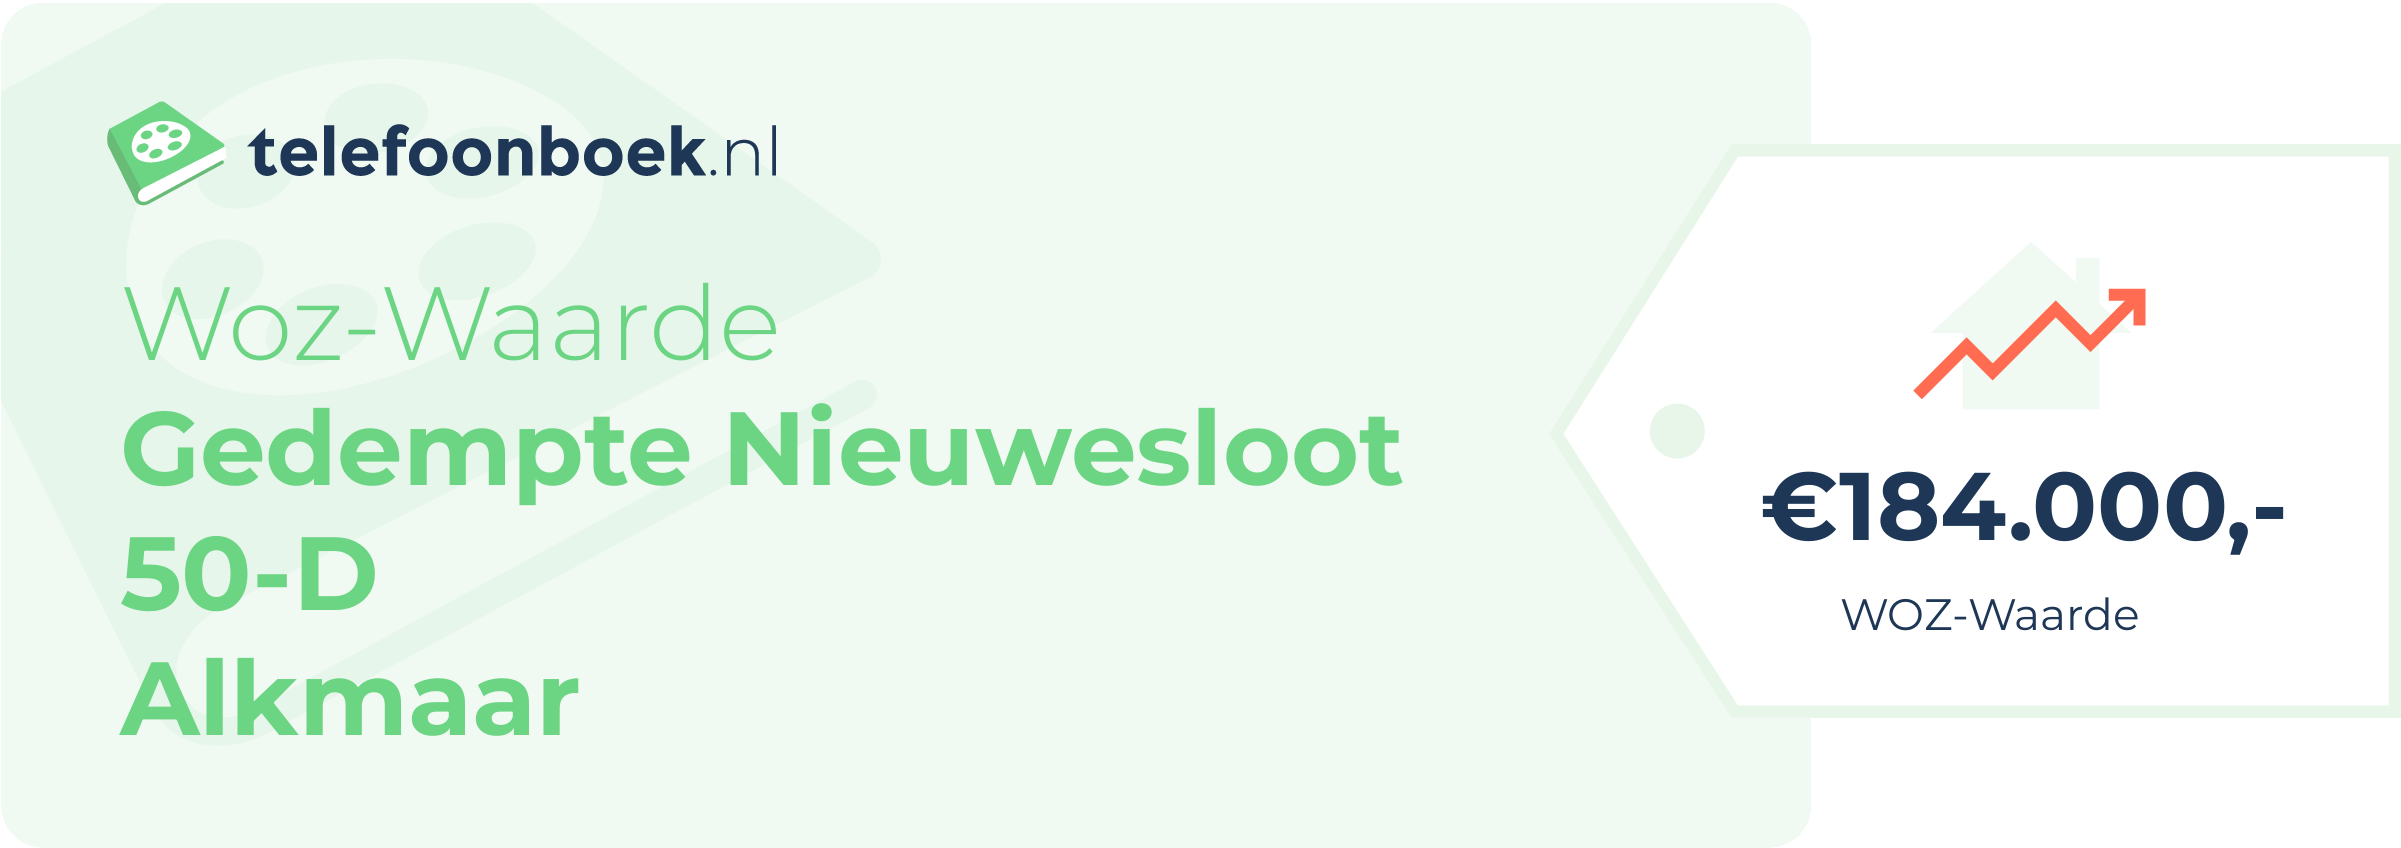 WOZ-waarde Gedempte Nieuwesloot 50-D Alkmaar